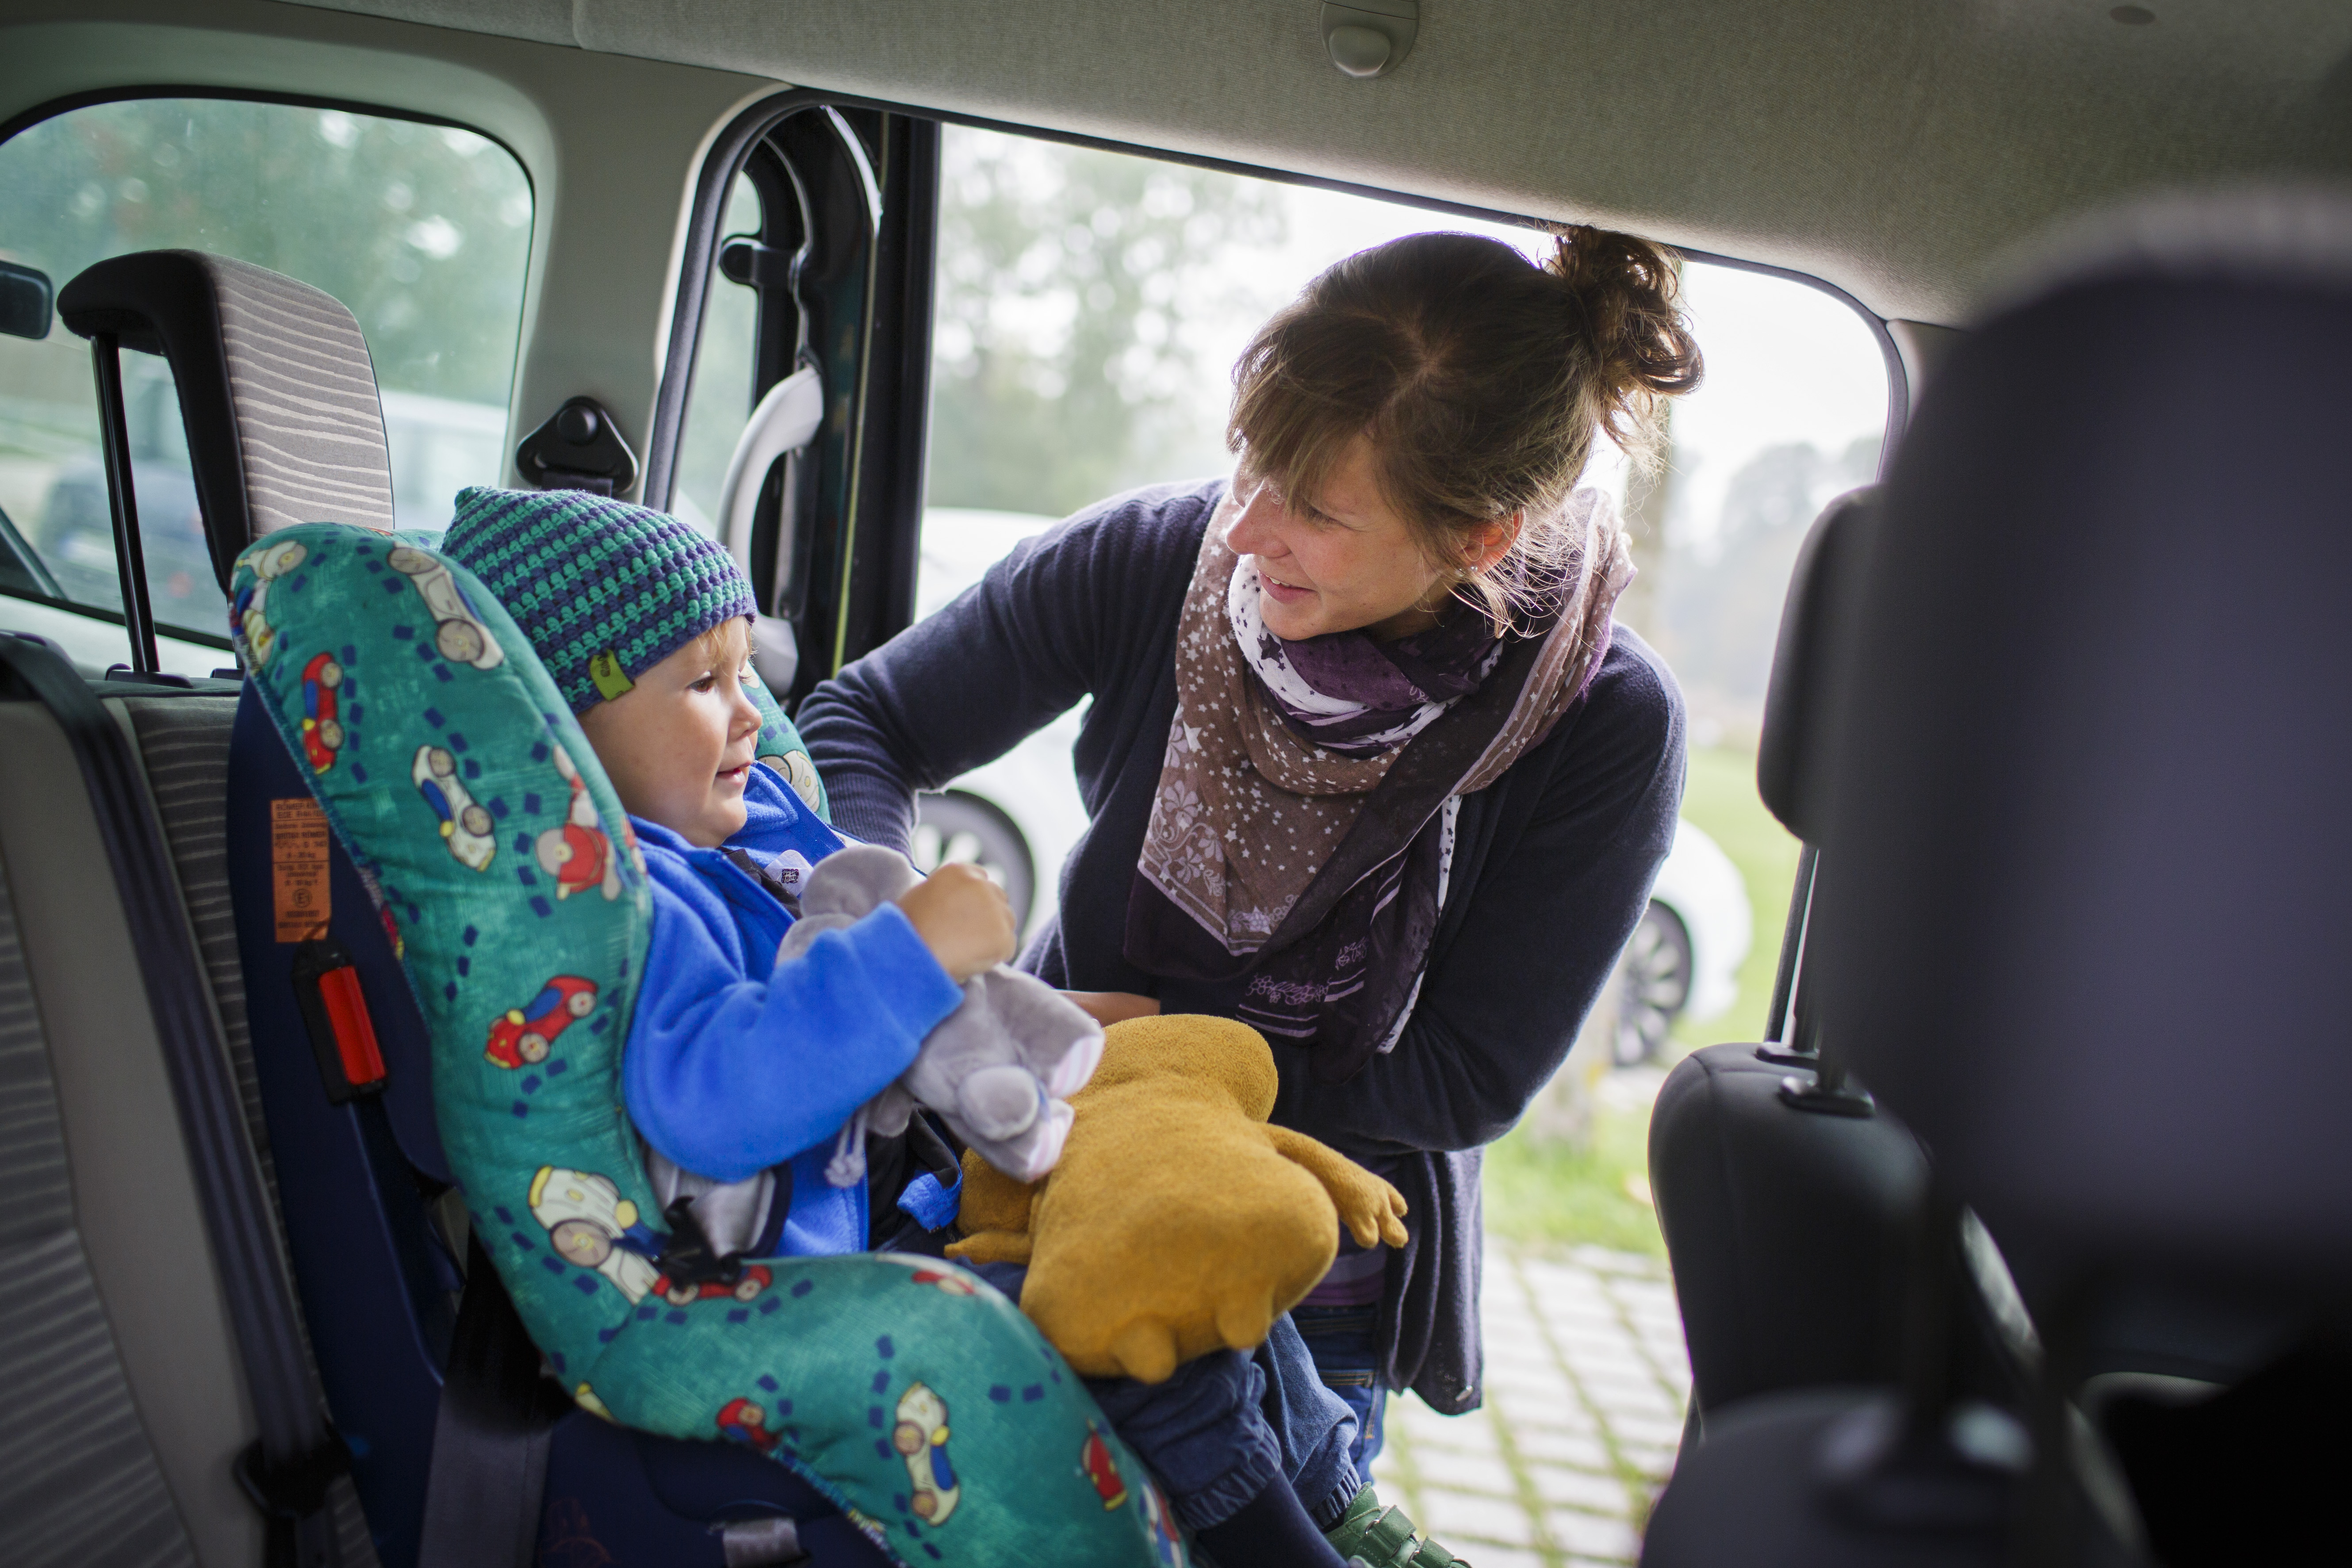 skip hop infant car seat cover